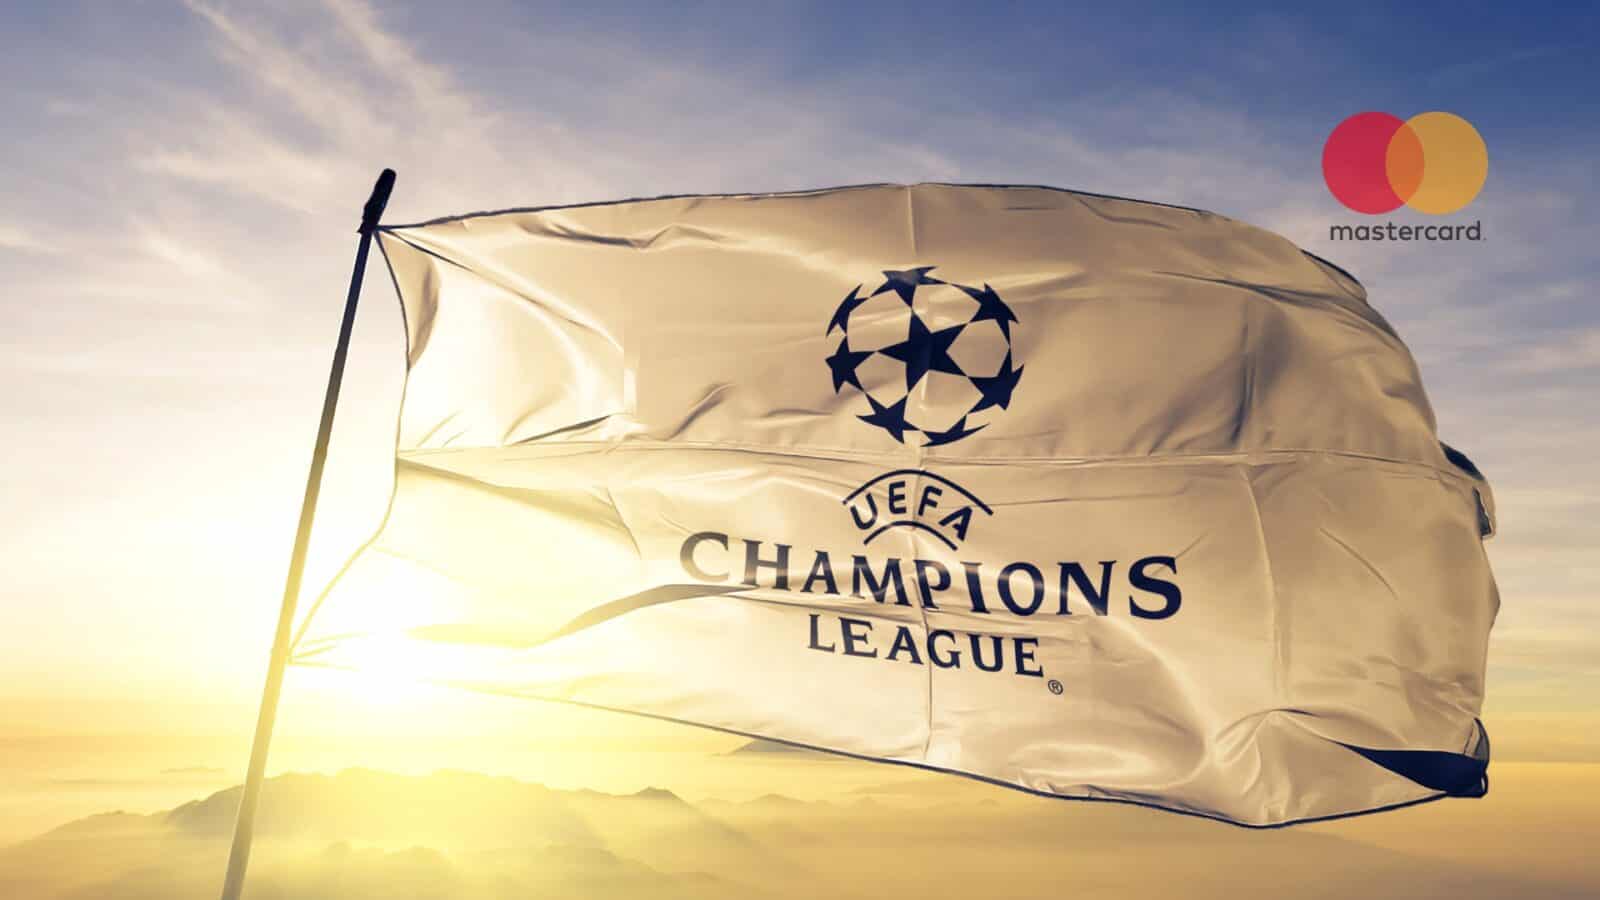 Mastercard Launches UEFA Champions League NFT Trivia Game